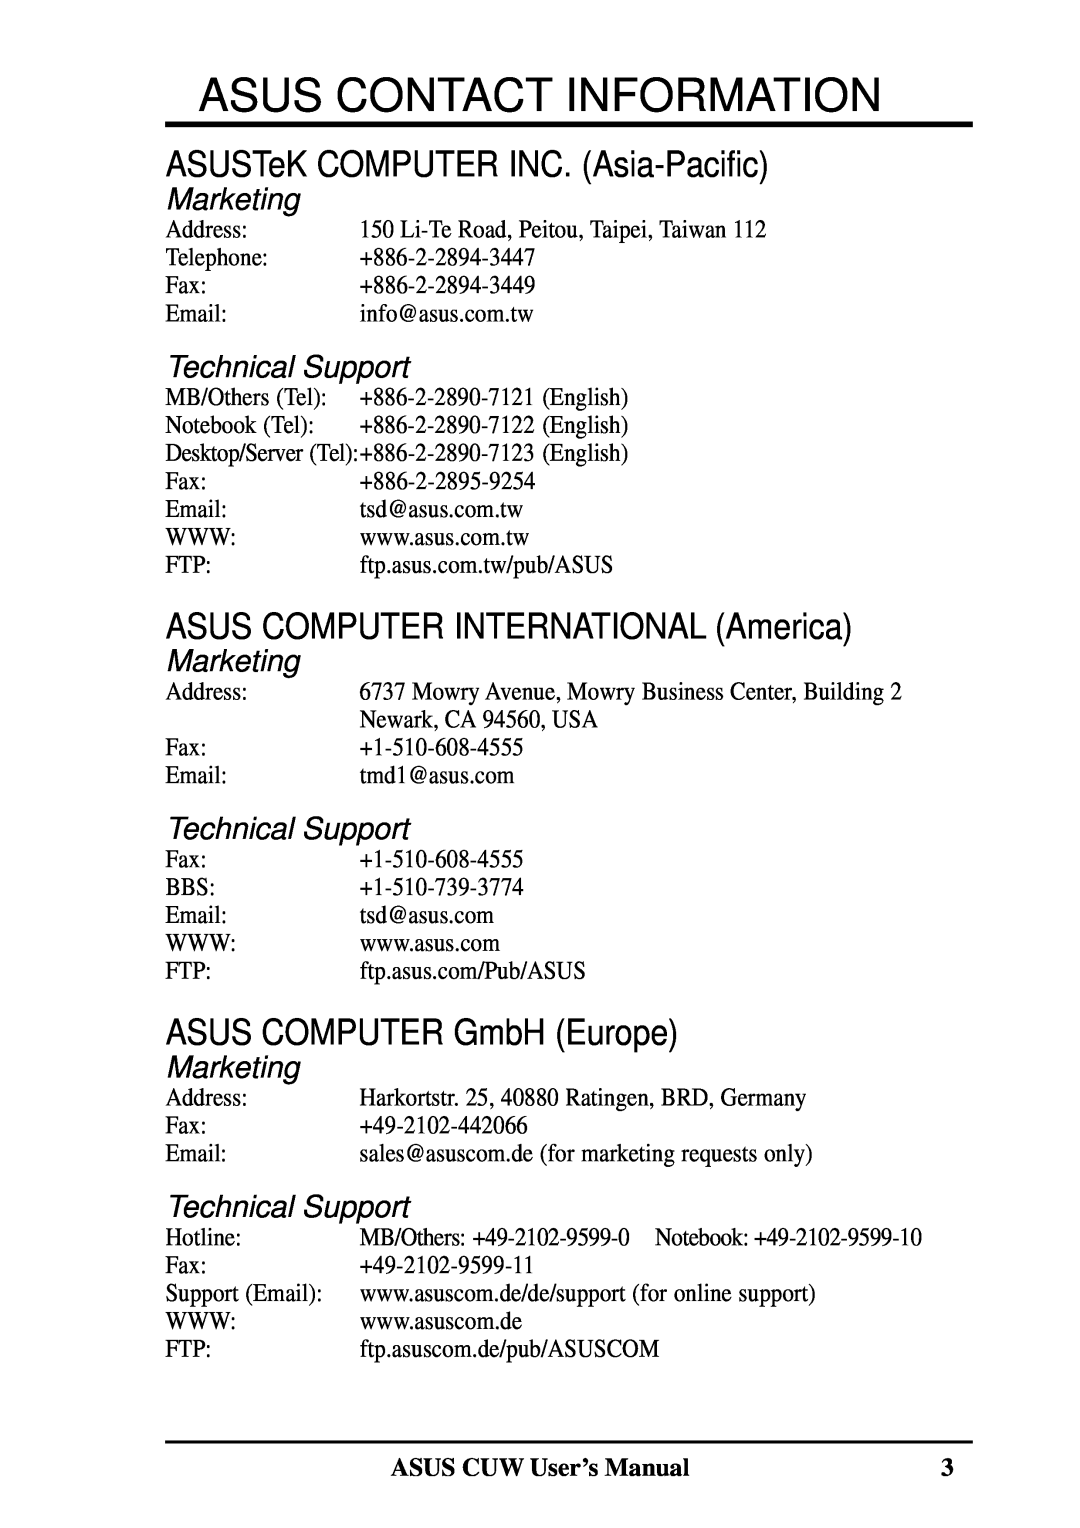 Asus 810 Asus Contact Information, ASUSTeK COMPUTER INC. Asia-Pacific, ASUS COMPUTER INTERNATIONAL America, Marketing 